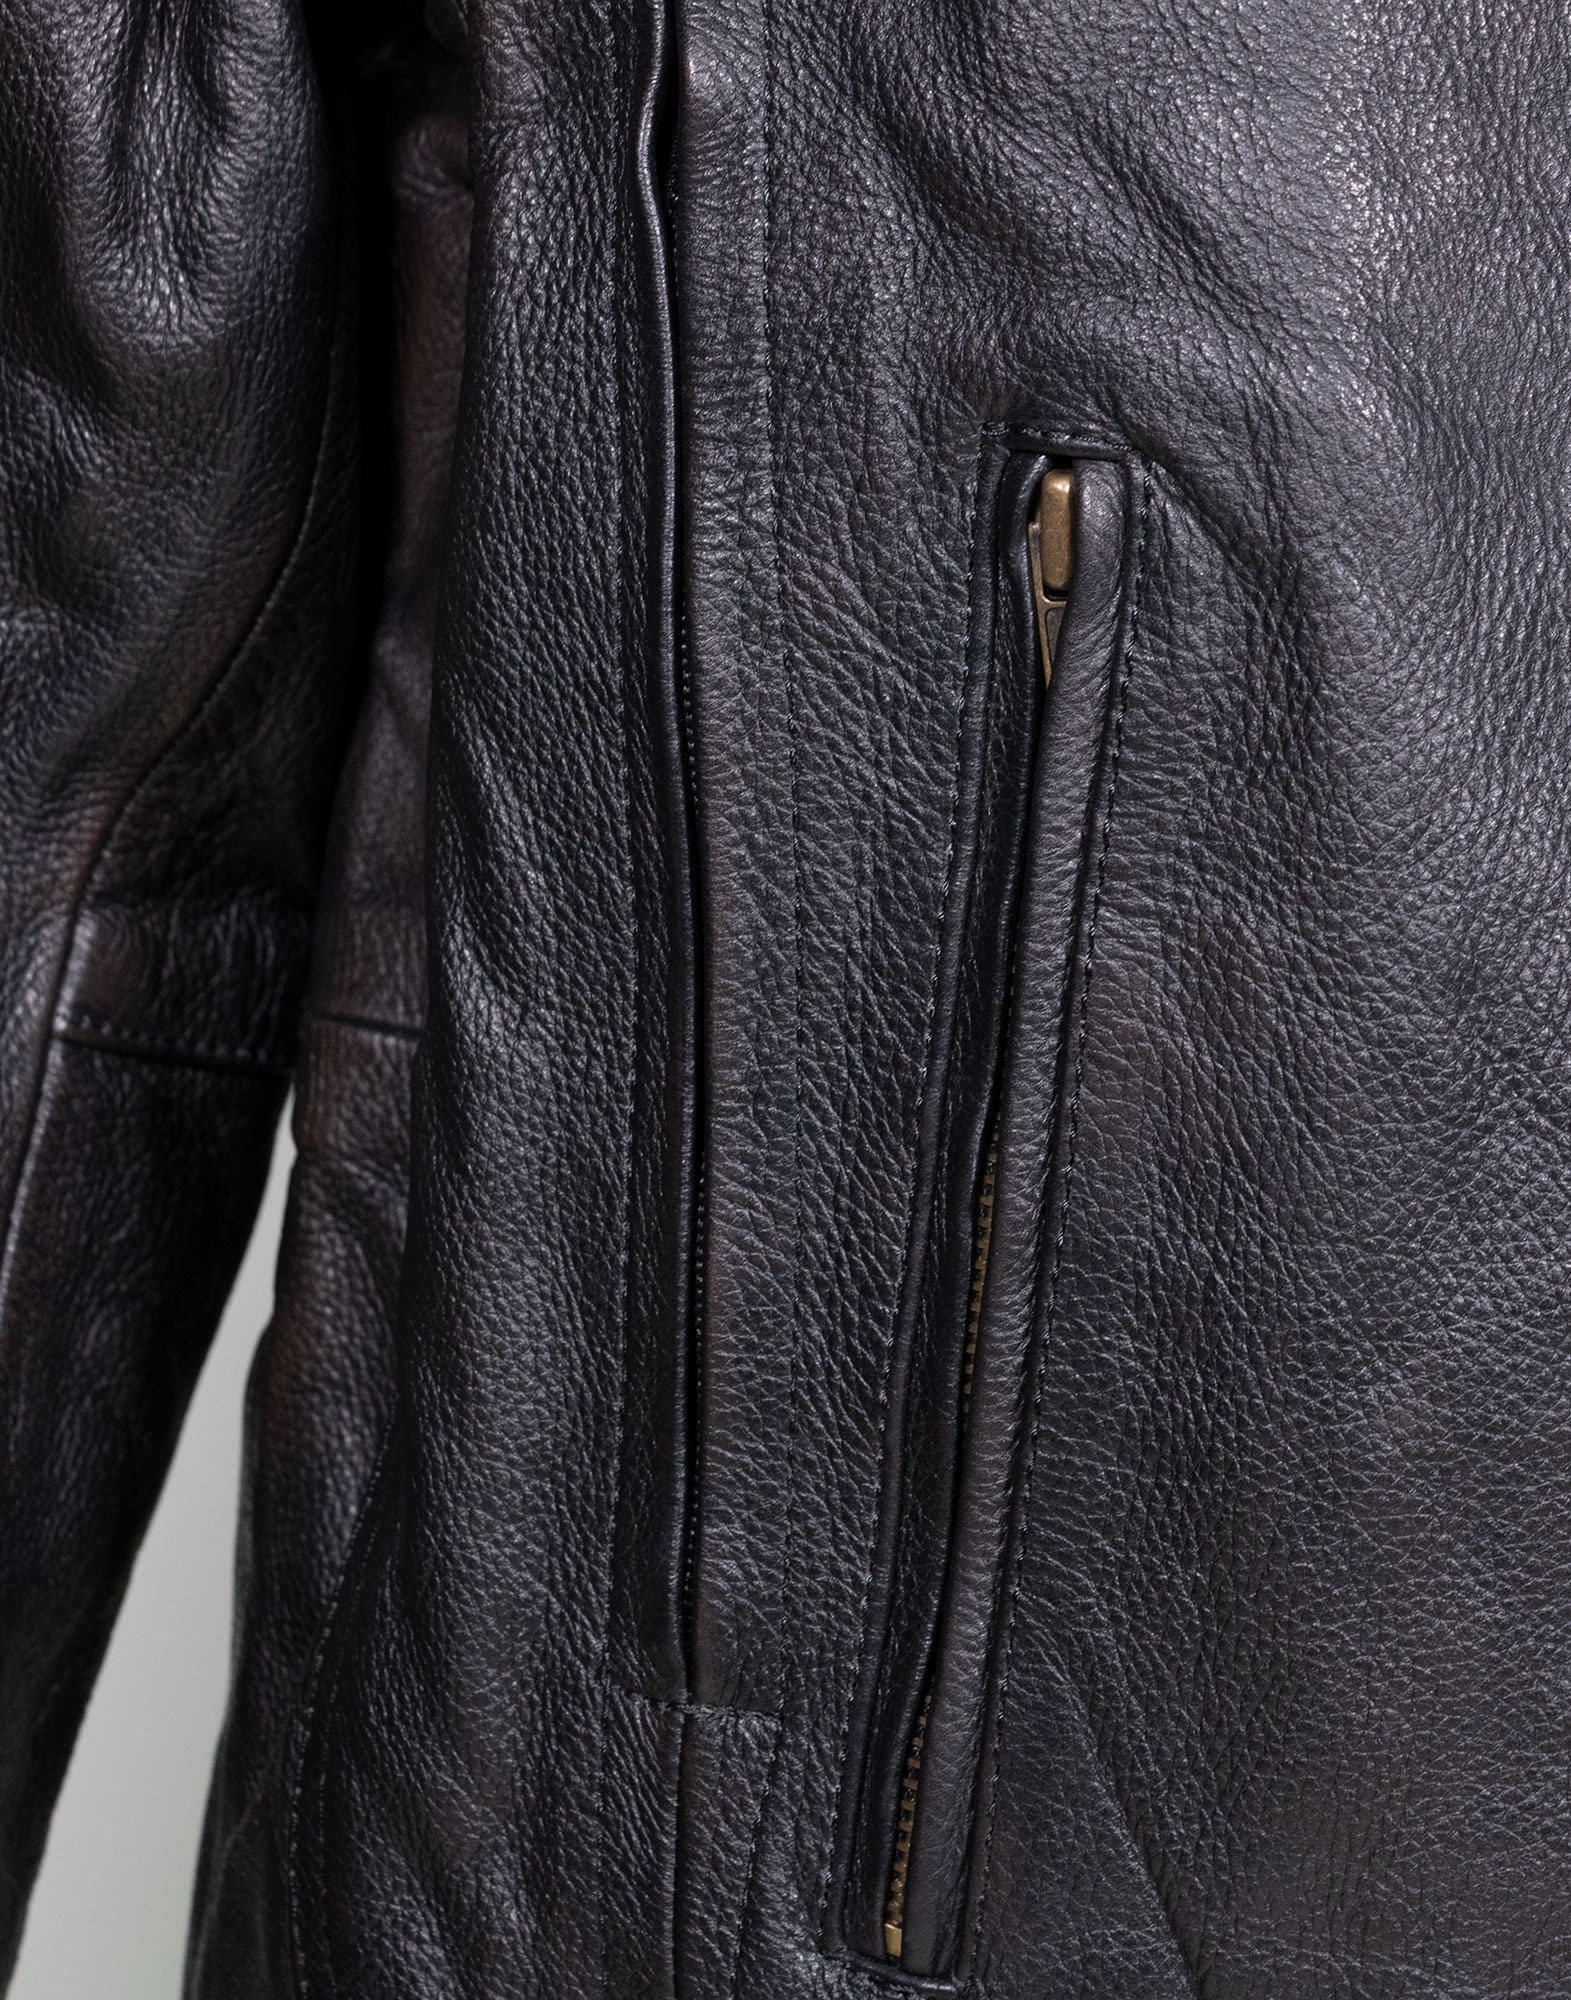 Harley Davidson - Bomber Leather jacket